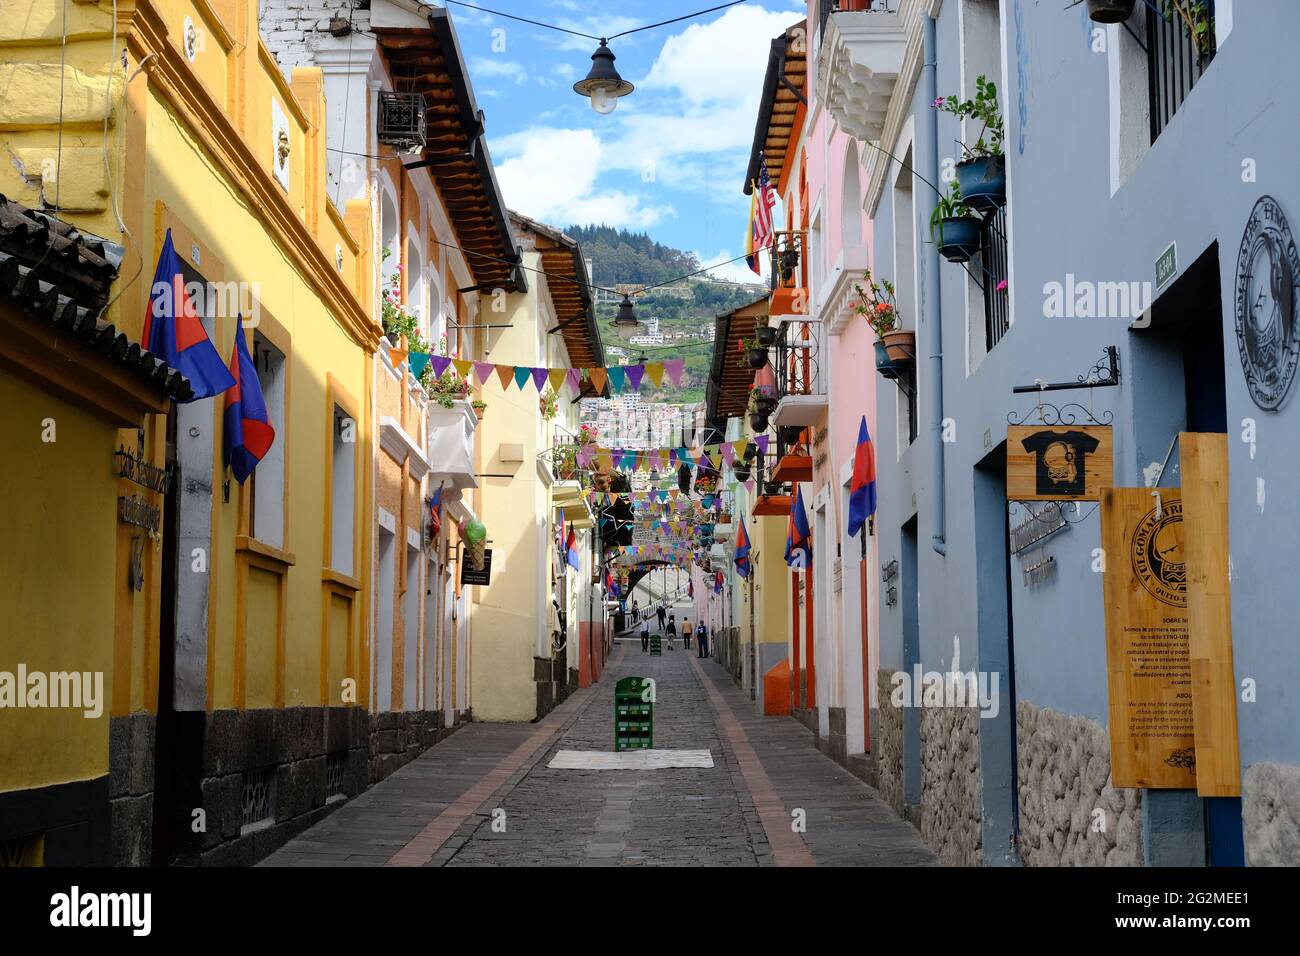 Ecuador Quito - Historical Center narrow street with colorful houses Stock Photo